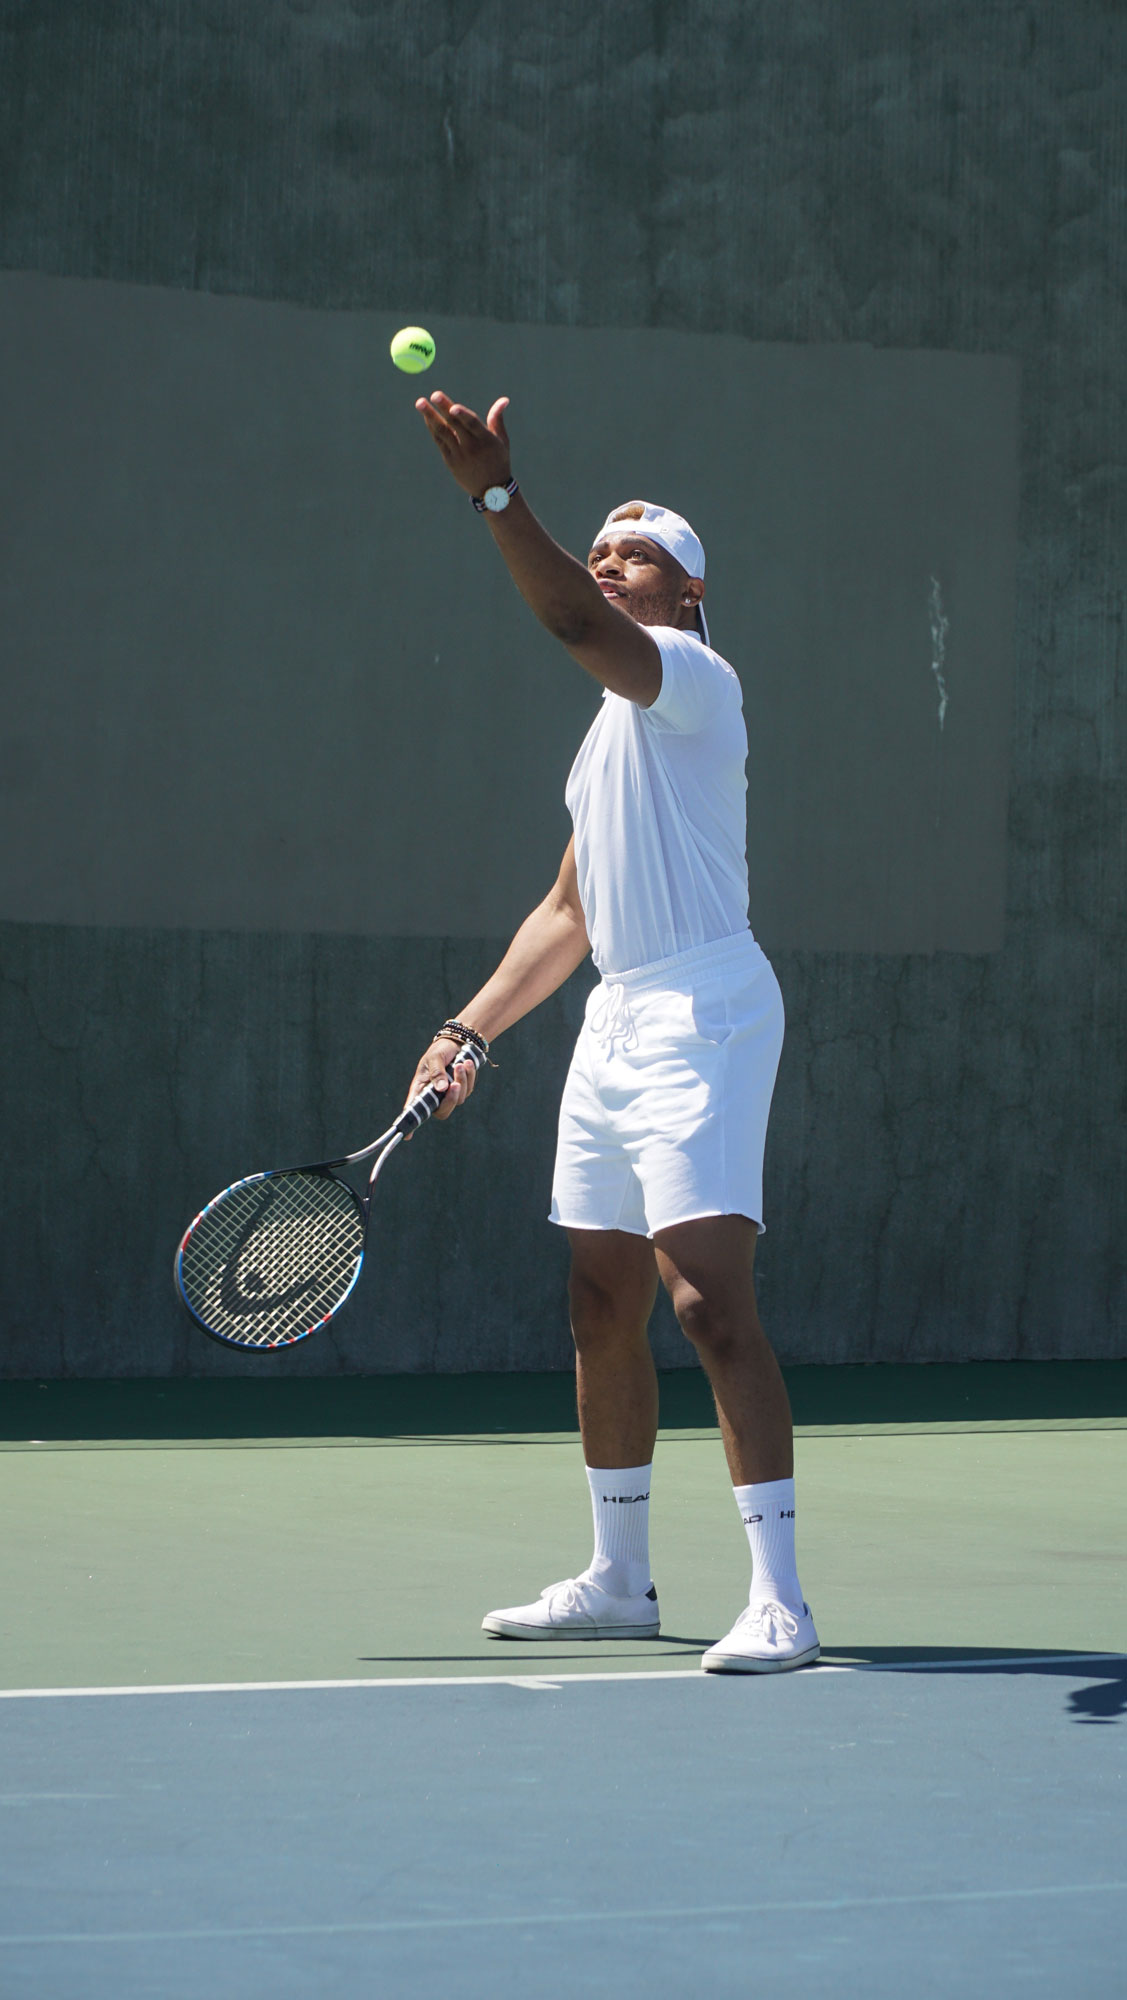 man serving in tennis